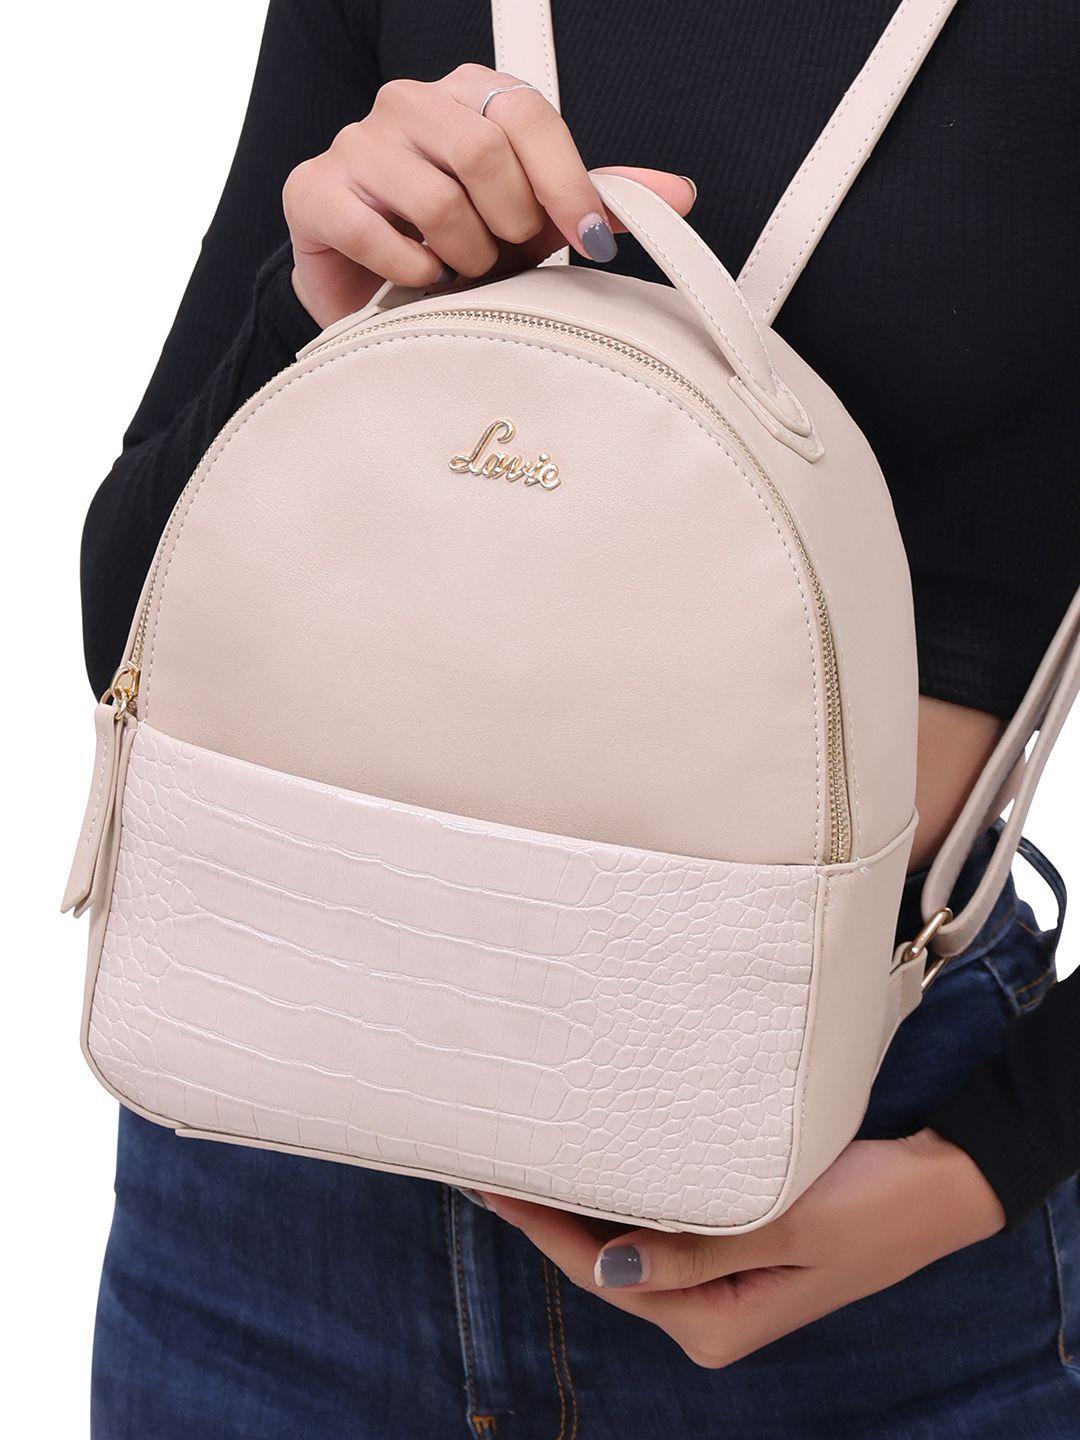 lavie-beetle-women-cream-colored-stylish-backpack